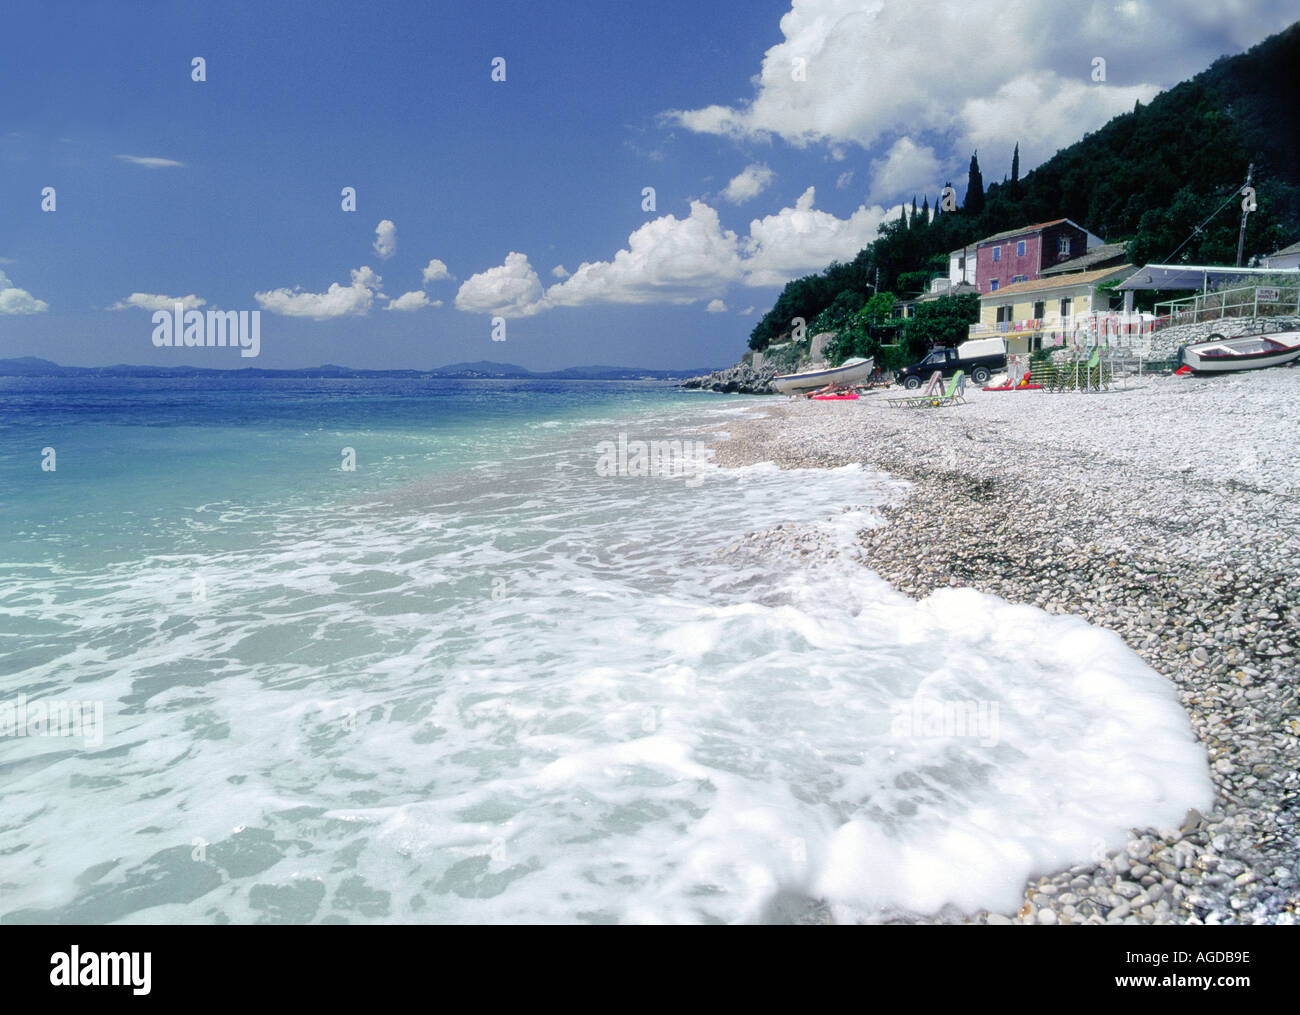 The beach at Kaminaki near Nissaki, Corfu Stock Photo